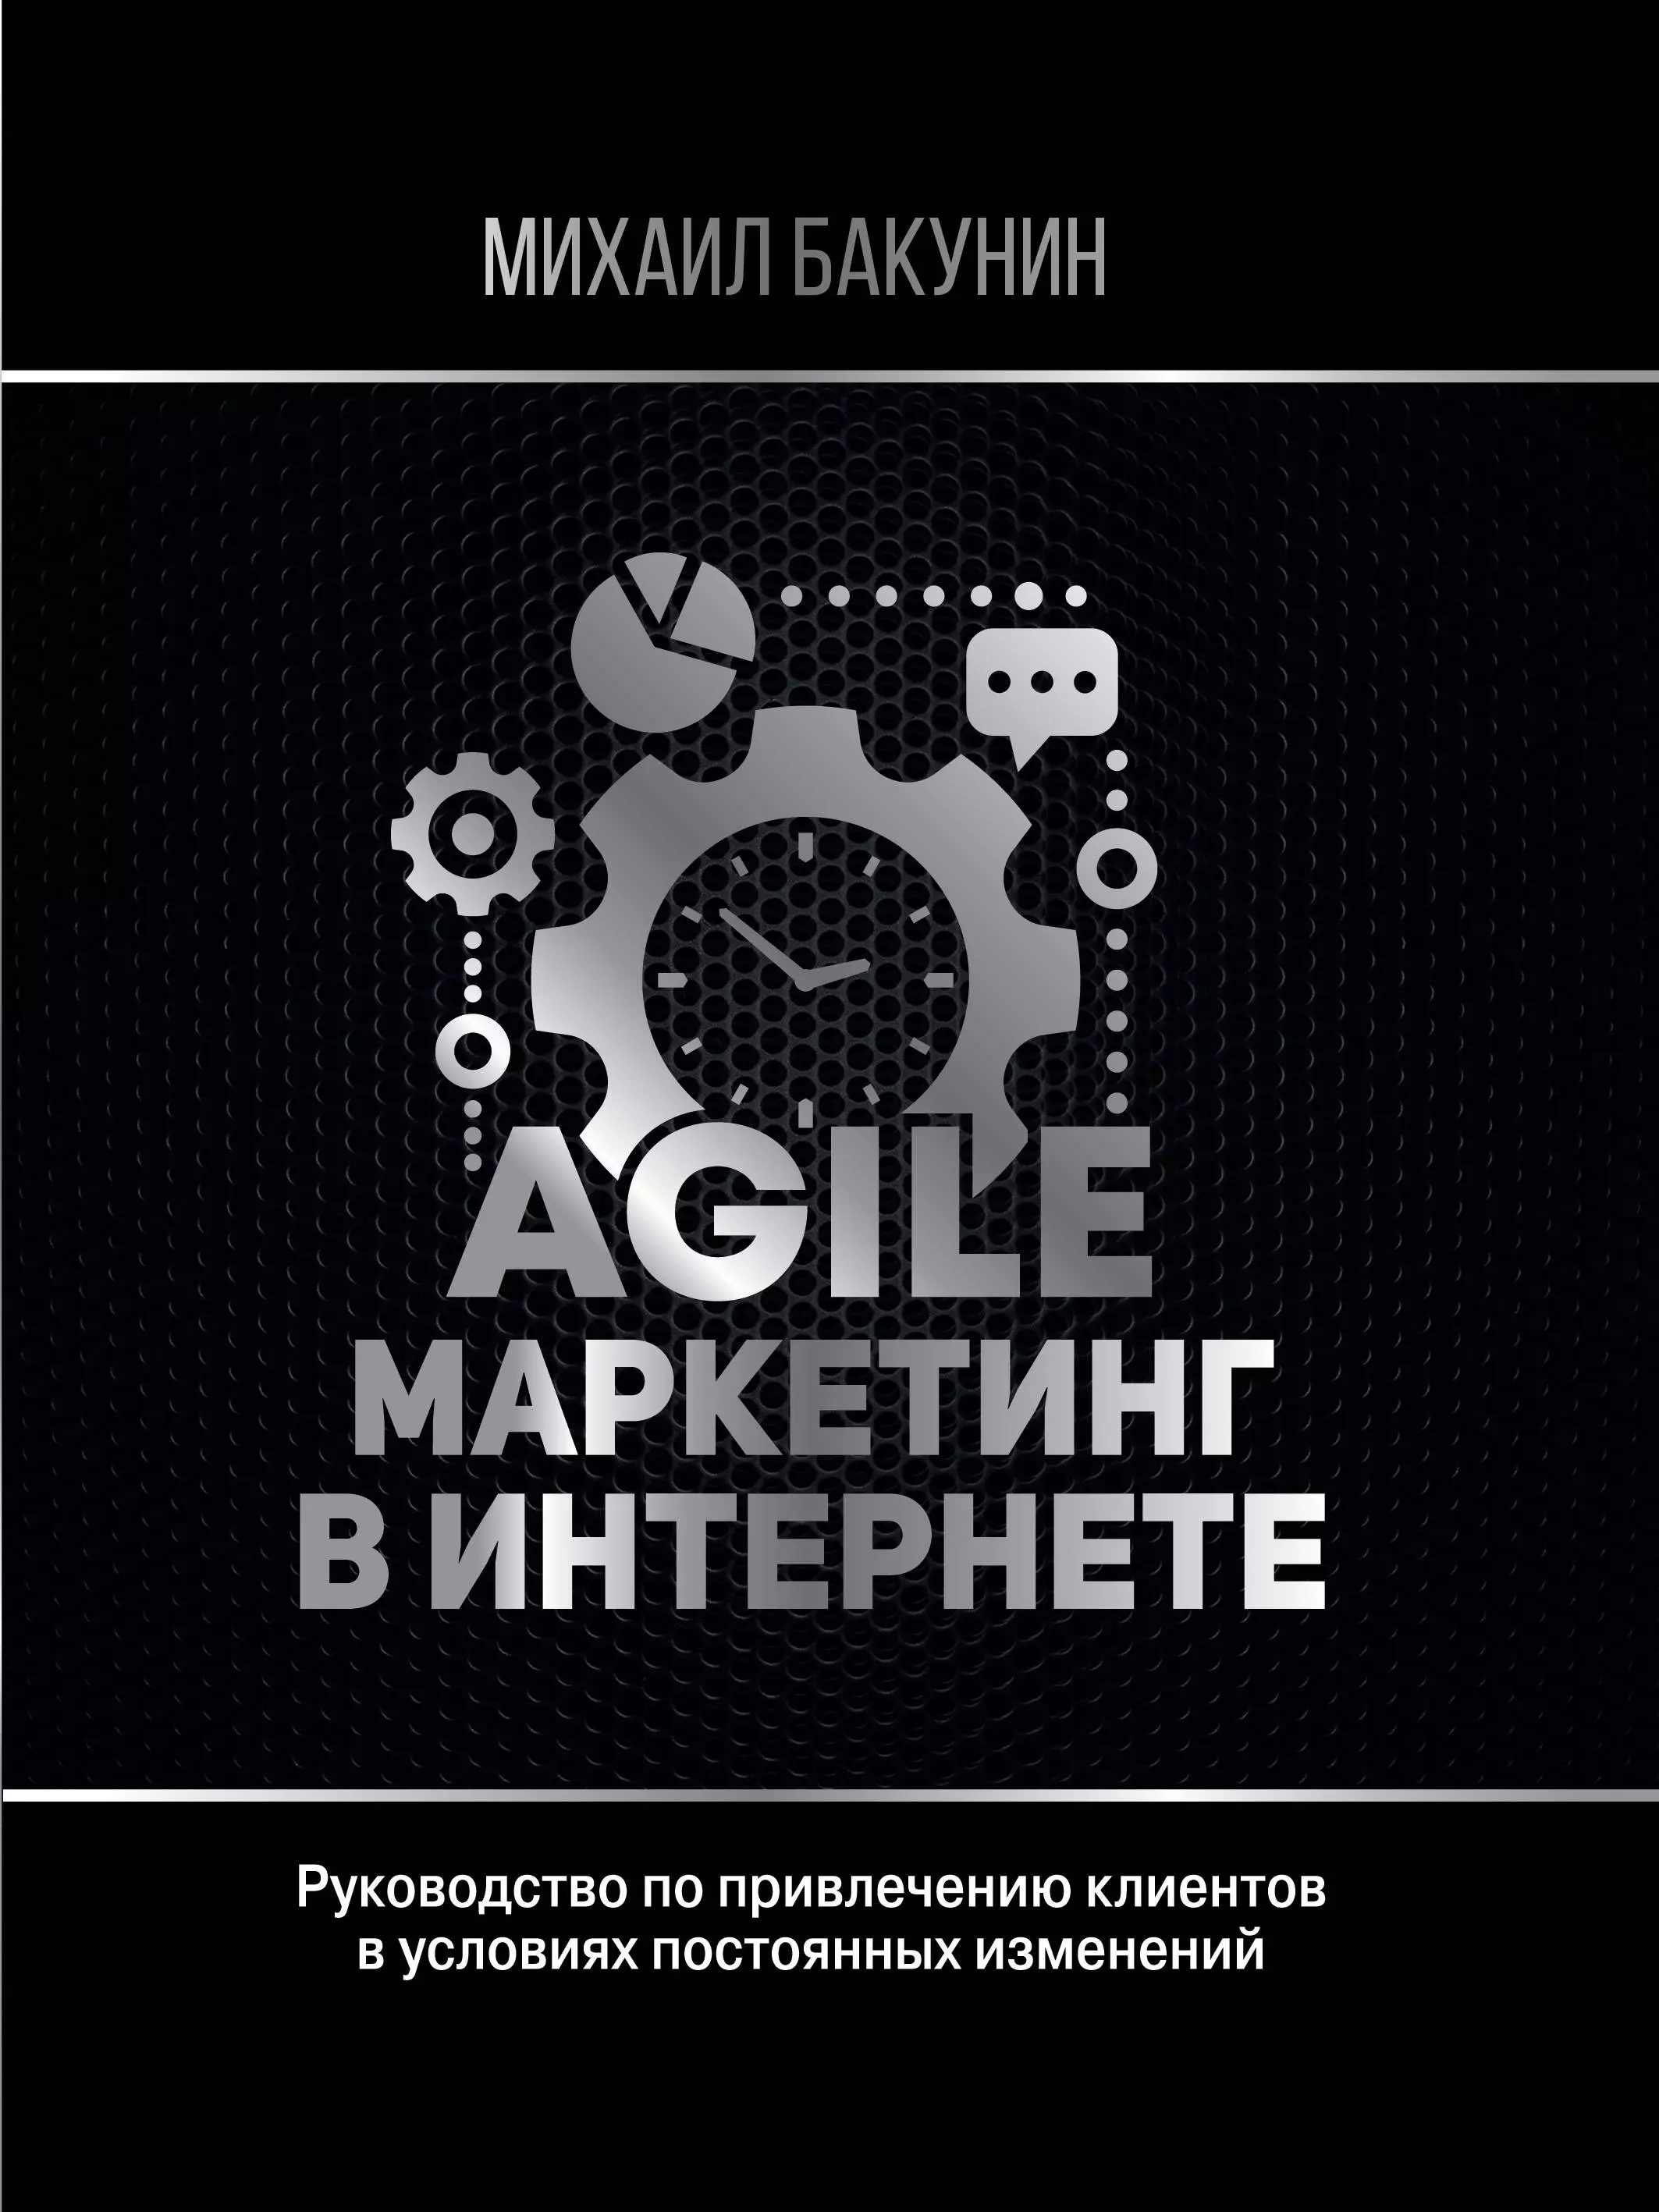 Поселягин Владимир Геннадьевич - Agile-маркетинг в интернете